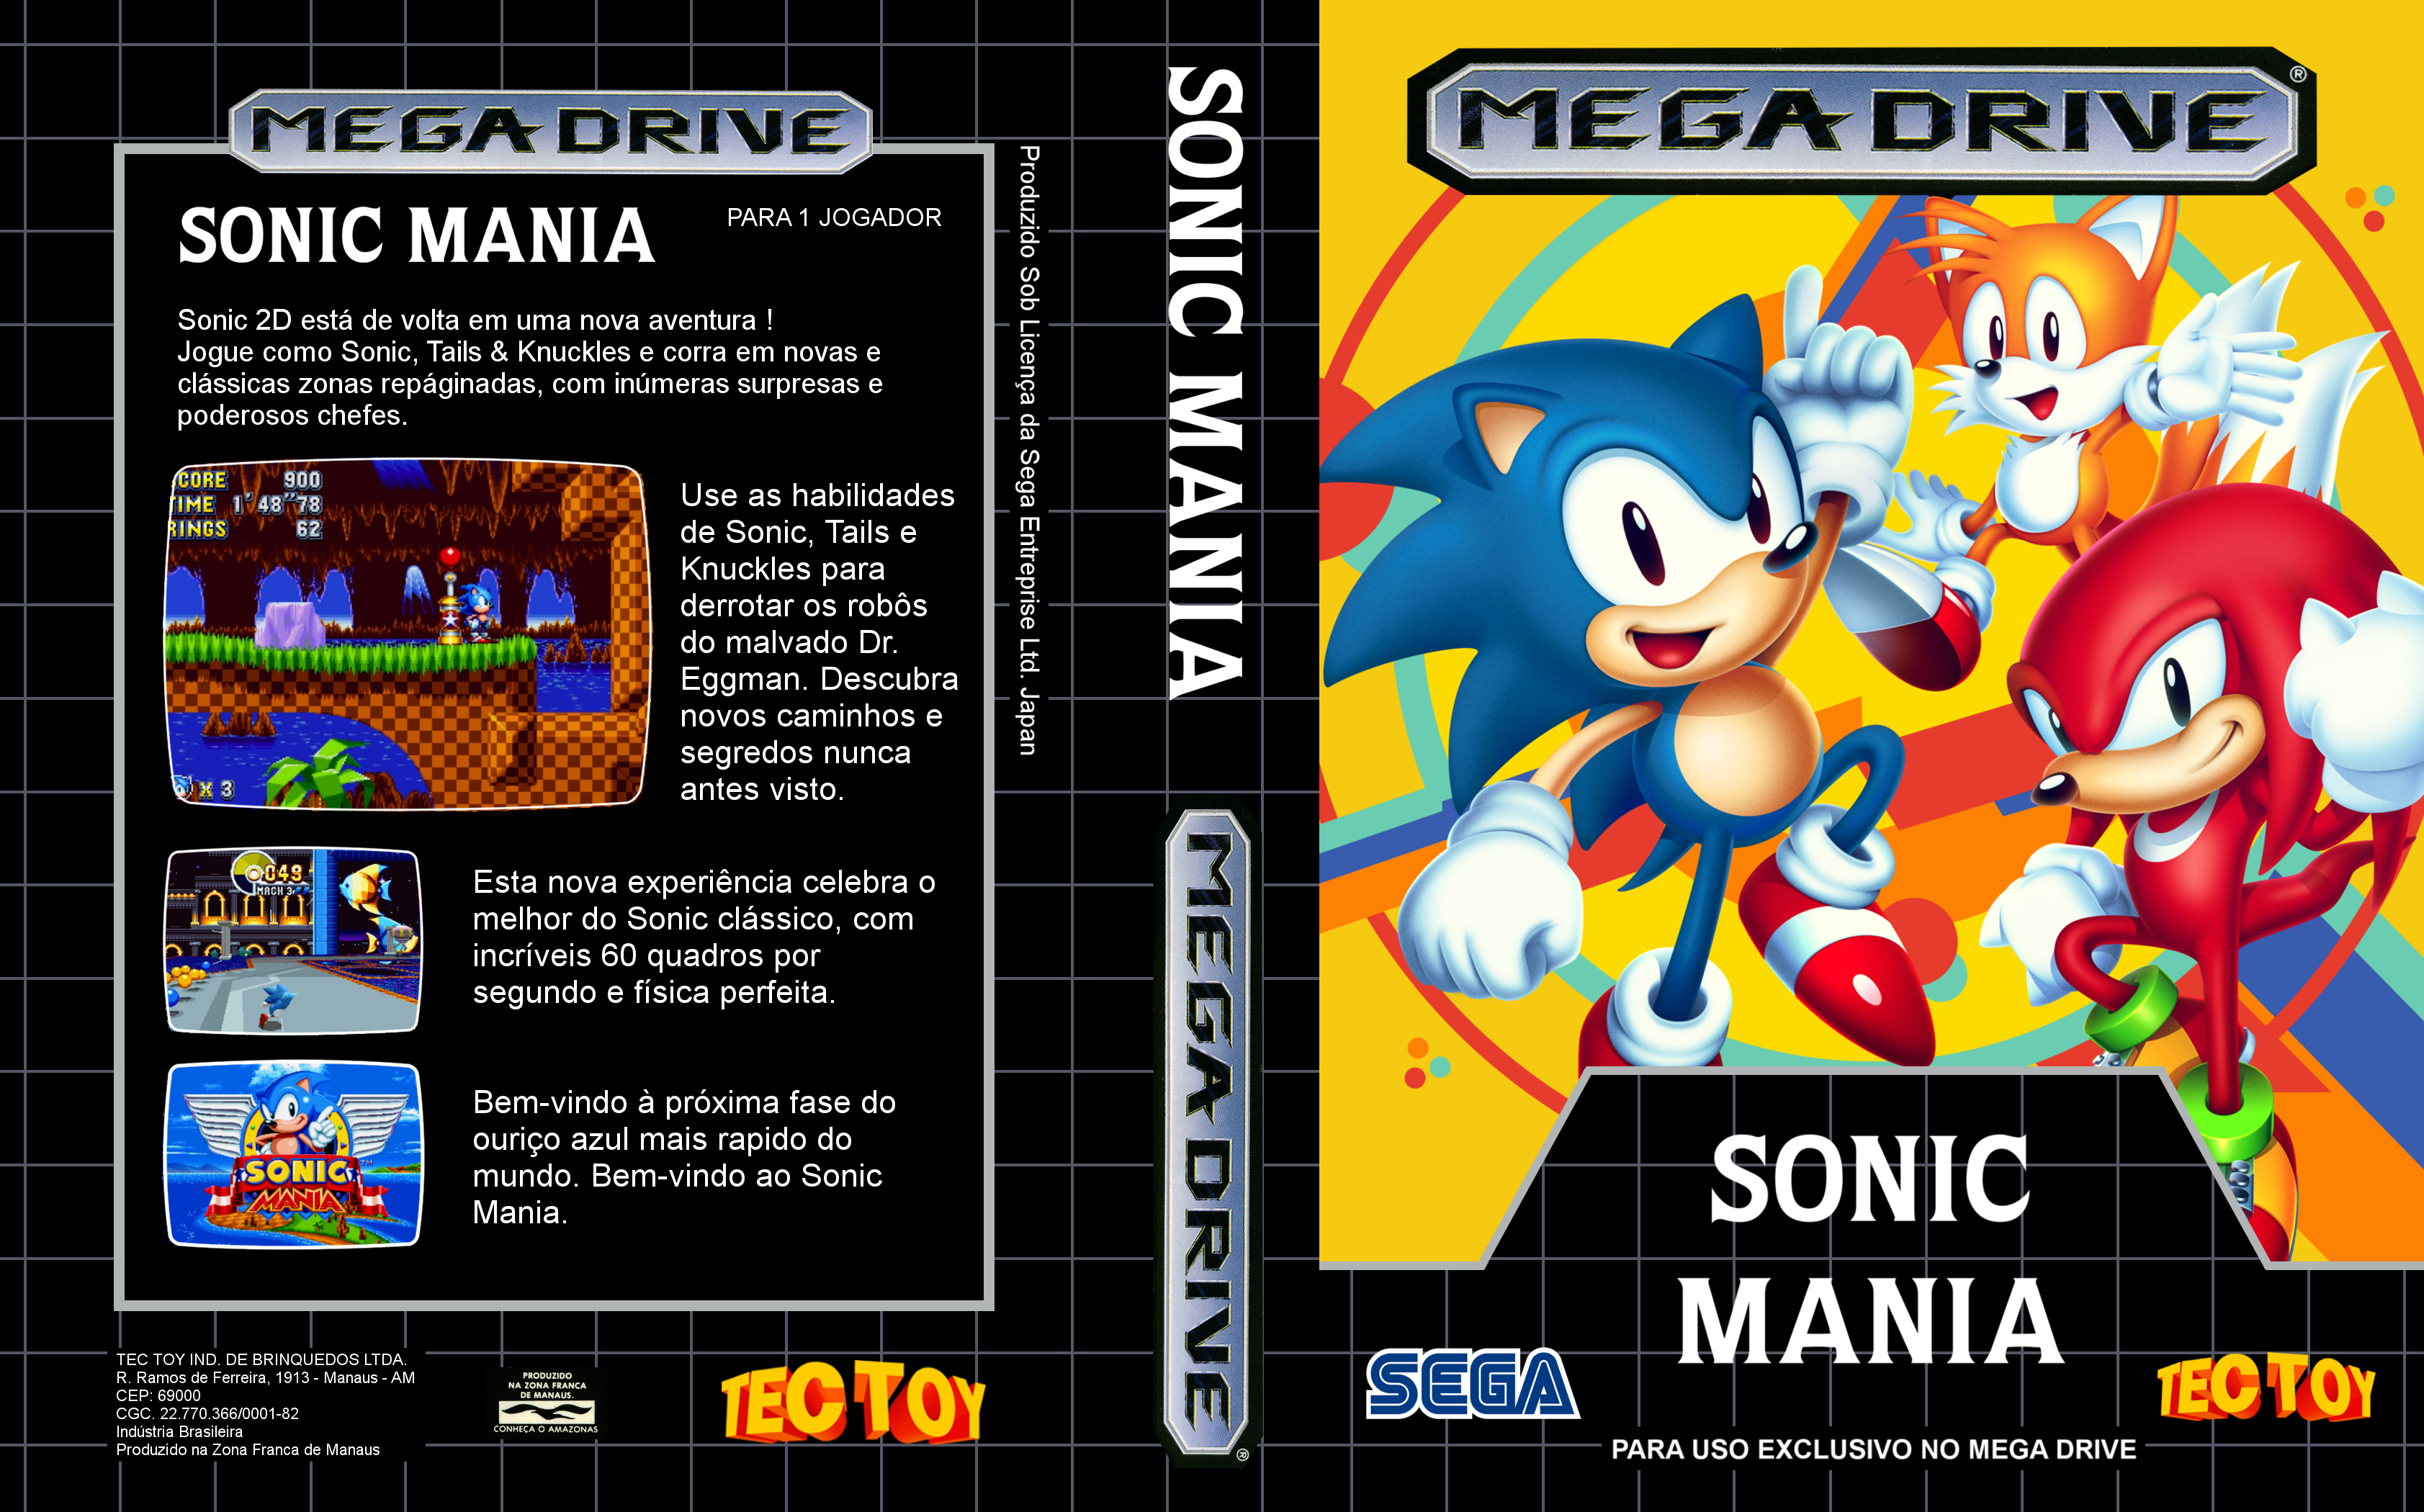 Sonic Mania Plus Mega Drive Cartridge. Sega Genesis Sonic 2 коробка. Sonic Mega Drive обложка. Картридж Соник Мания для приставки Sega. Соник мега драйв